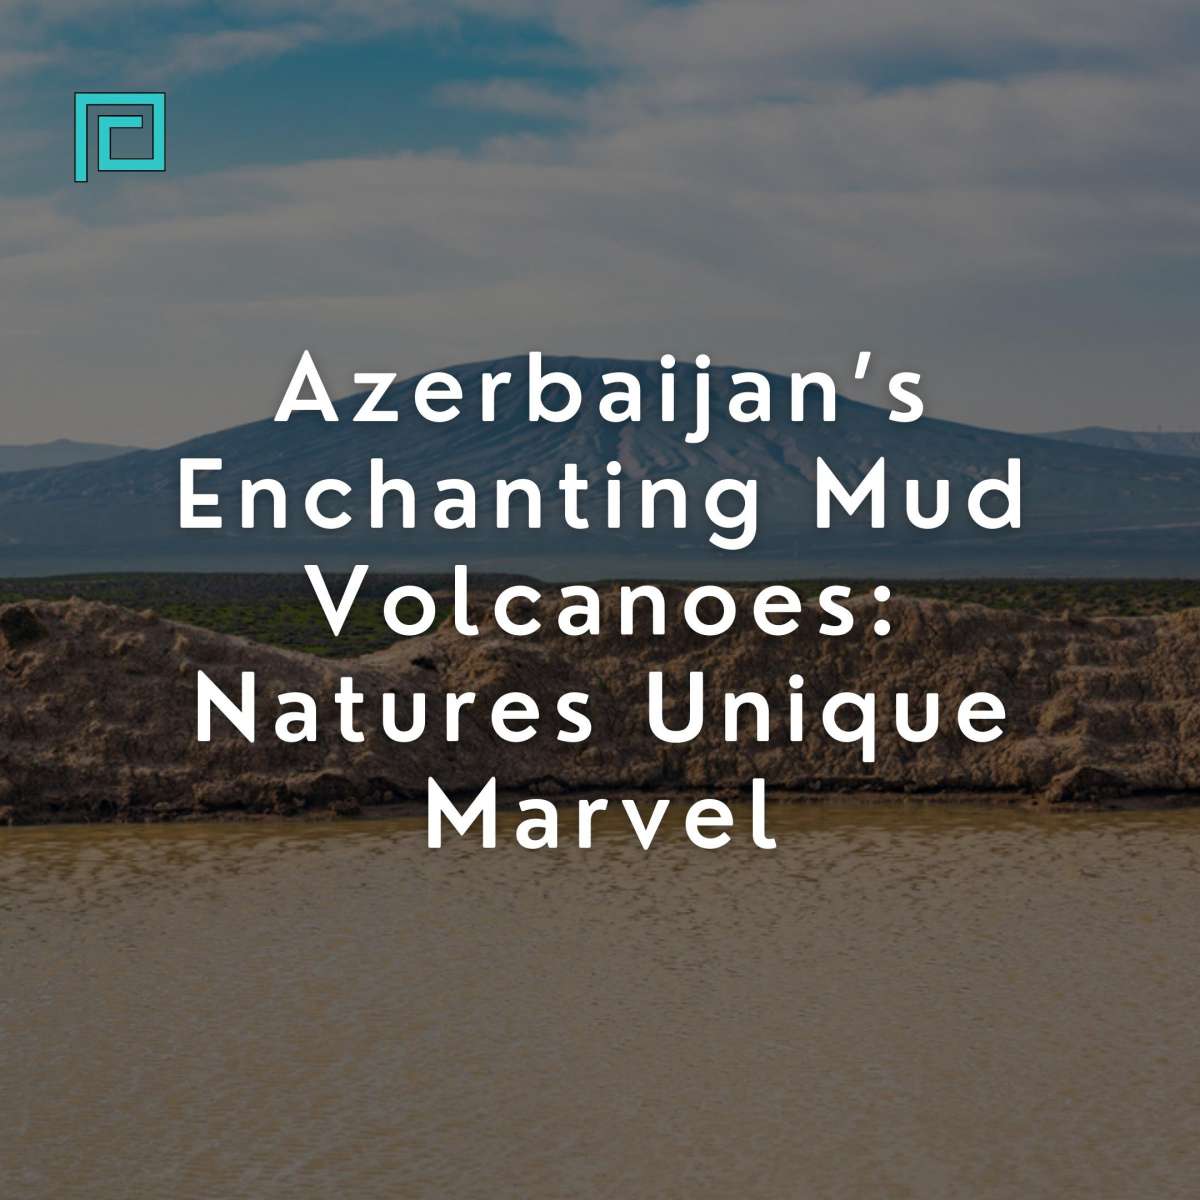 Azerbaijan’s Enchanting Mud Volcanoes: Natures Unique Marvel